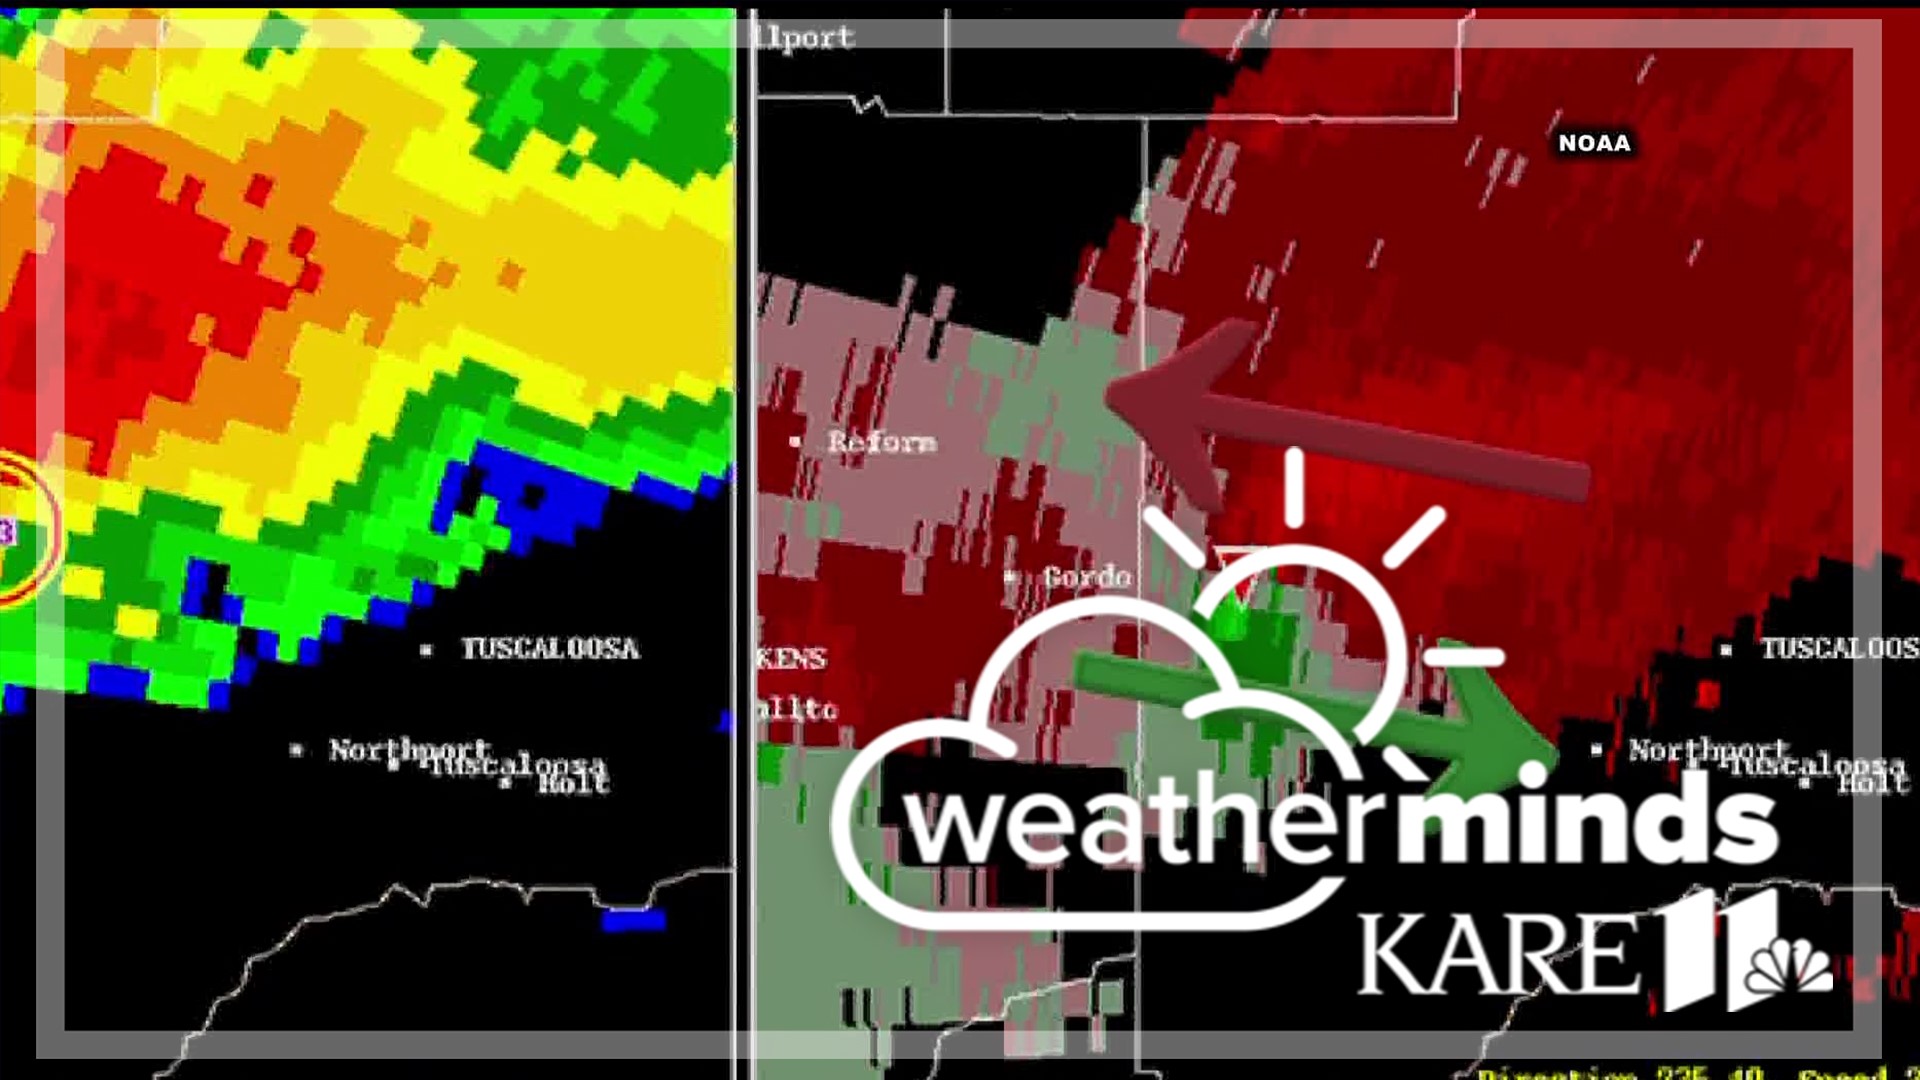 Meteorologist Jamie Kagol explains how Doppler radar can detect severe weather events like tornadoes.